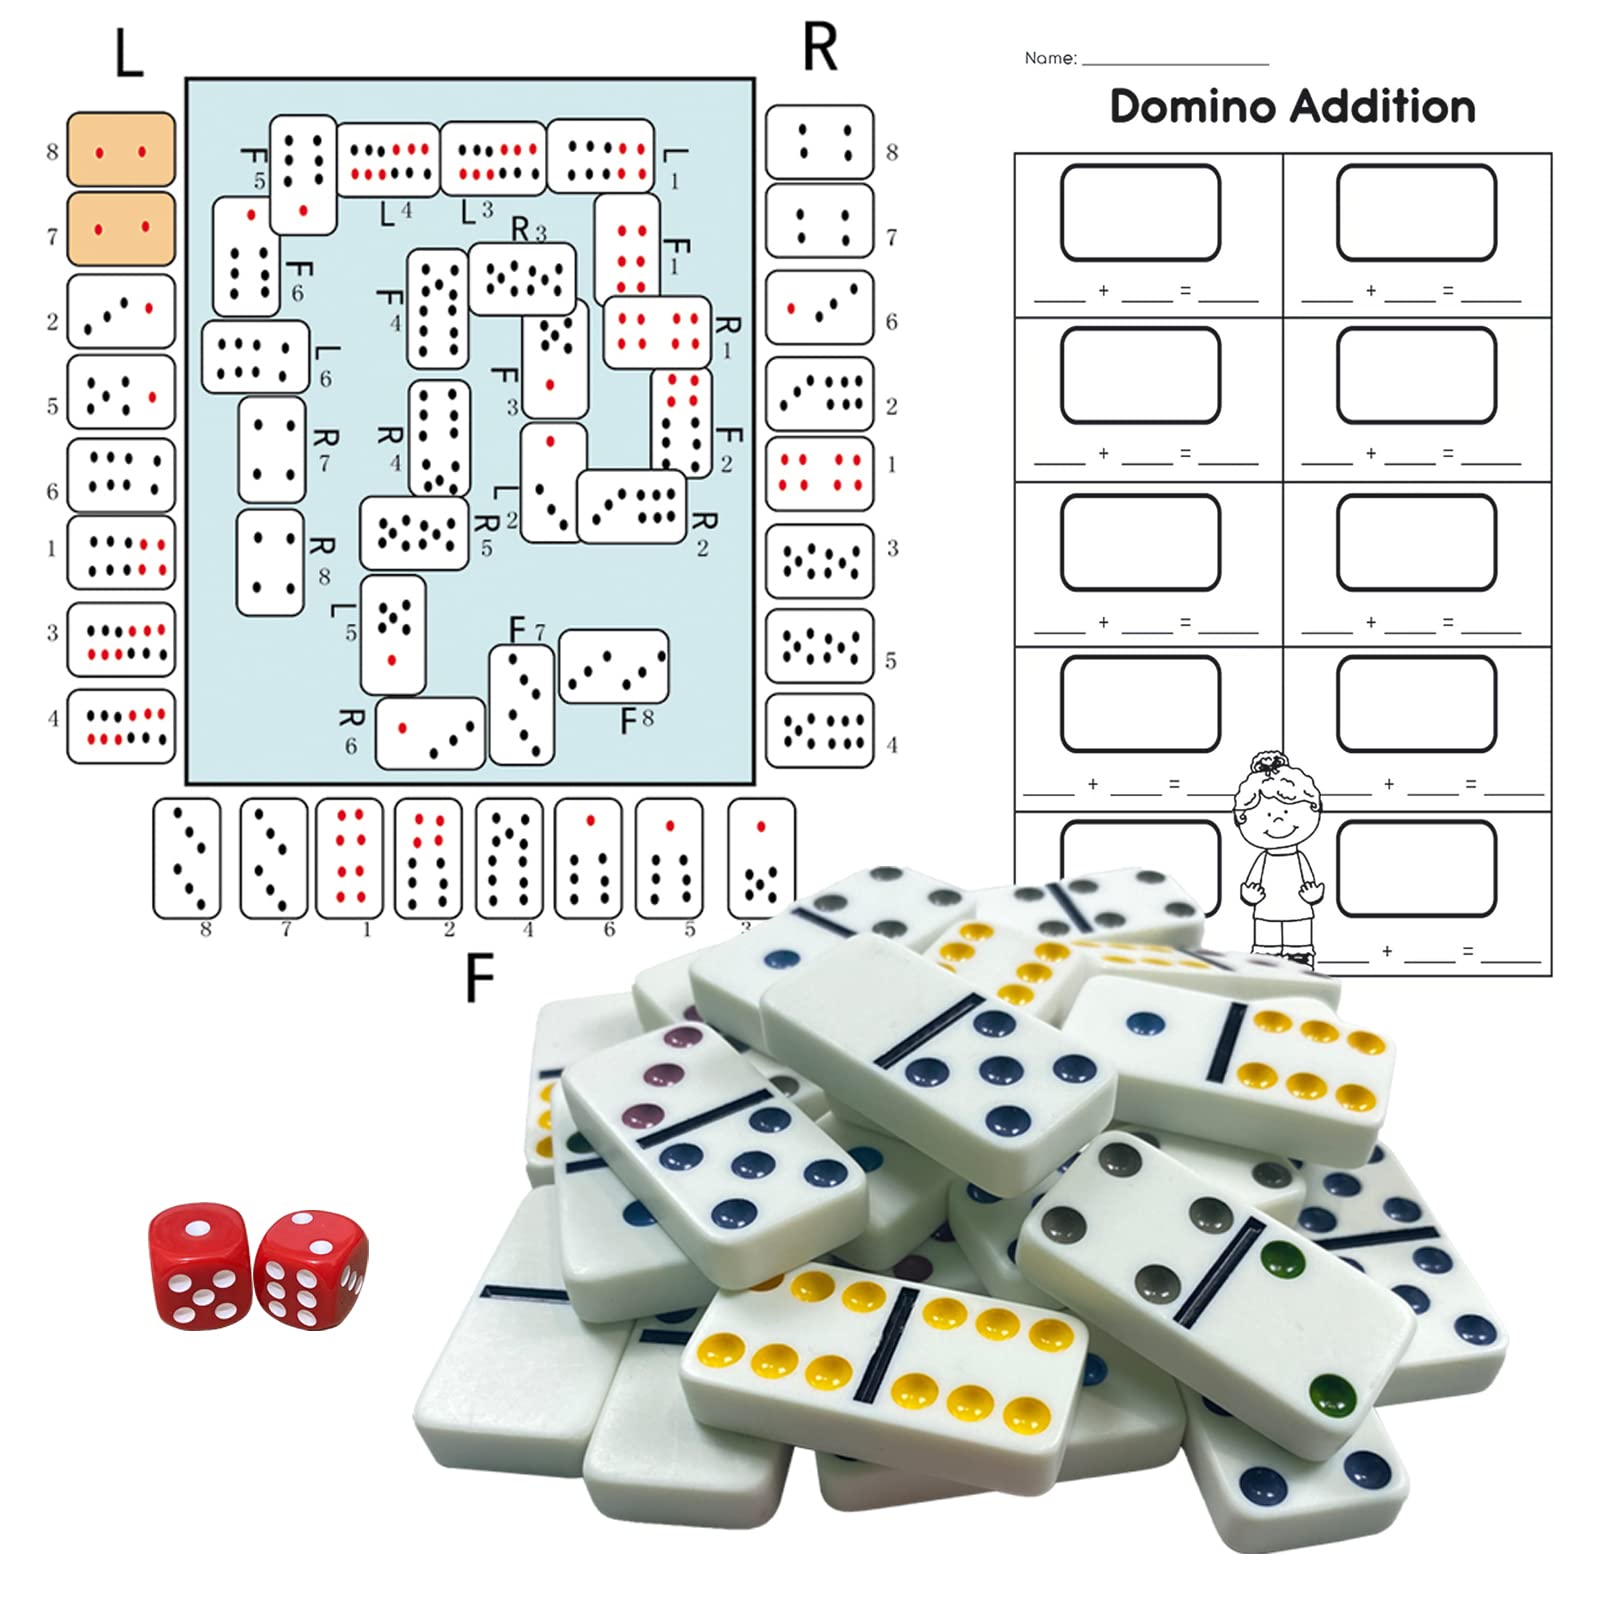 Double dominoes set